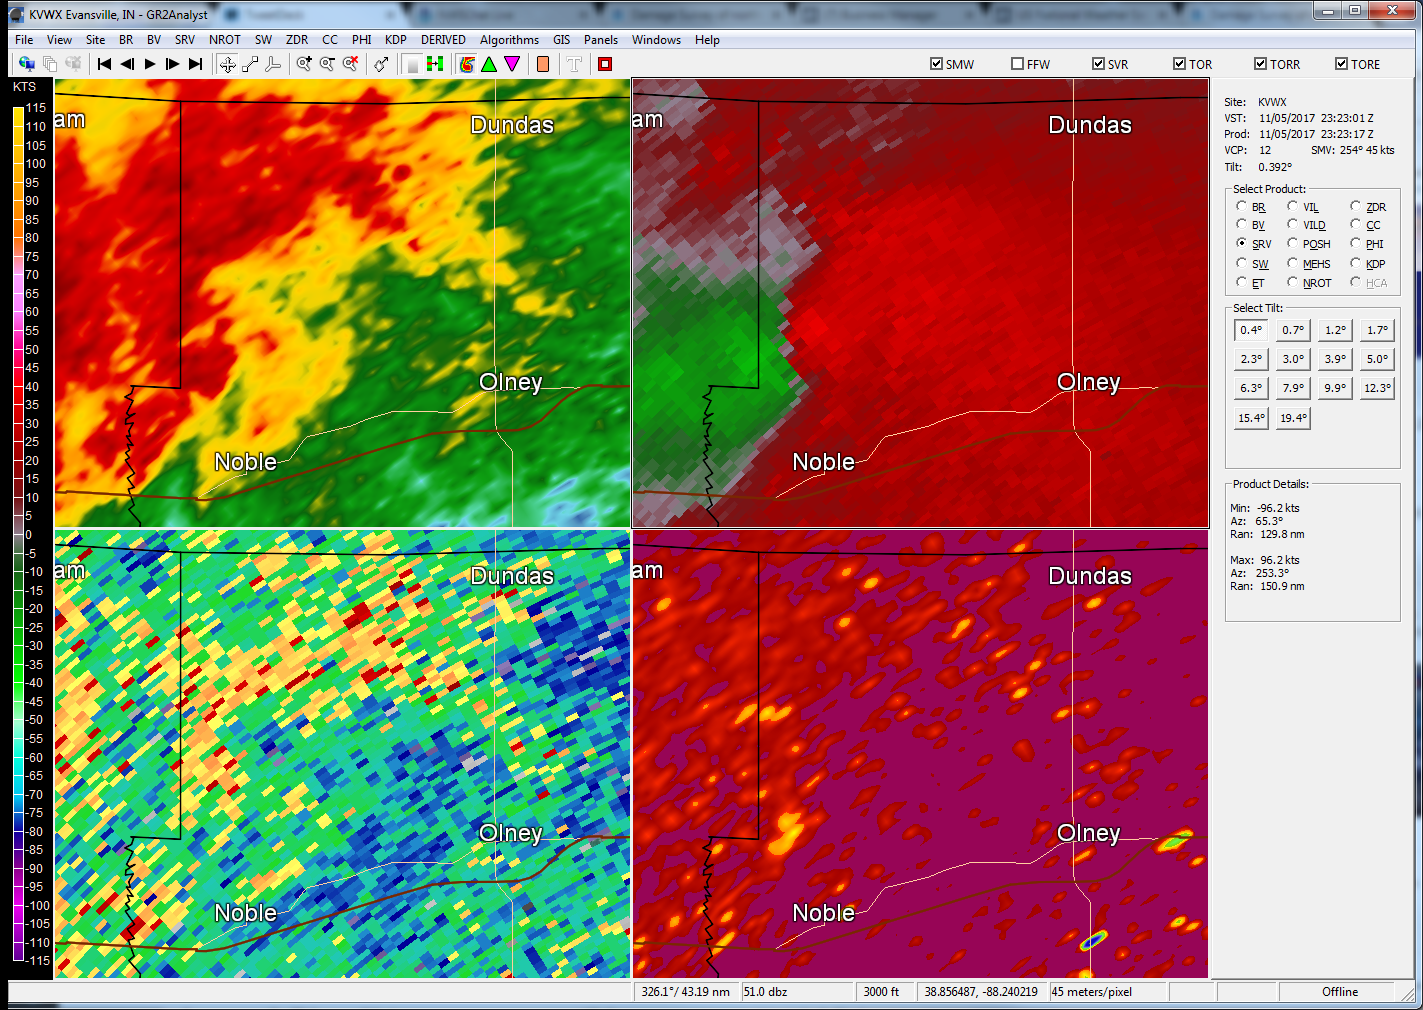 Evansville radar image from 5:23 pm